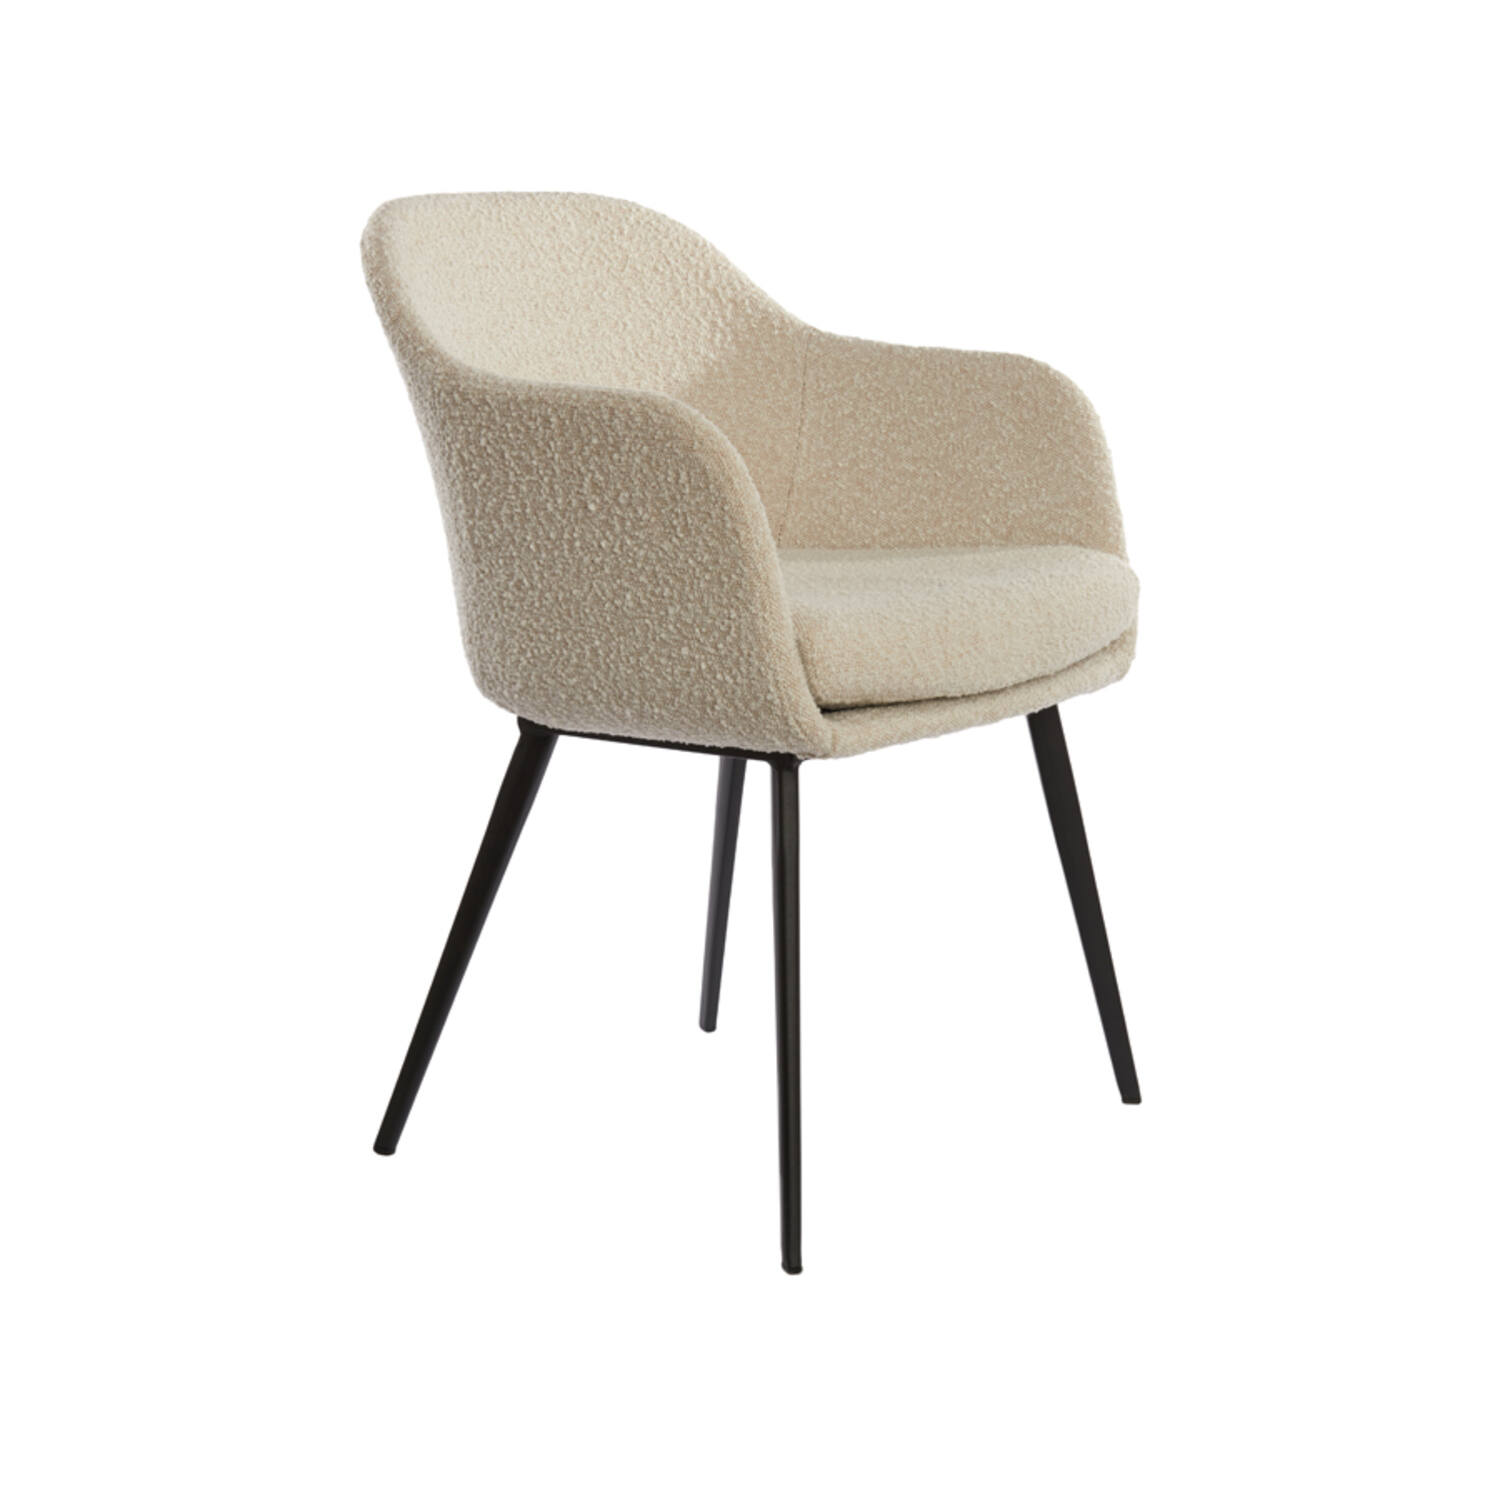 Dining chair 59x58,5x82 cm LEONE bouclé light beige-black